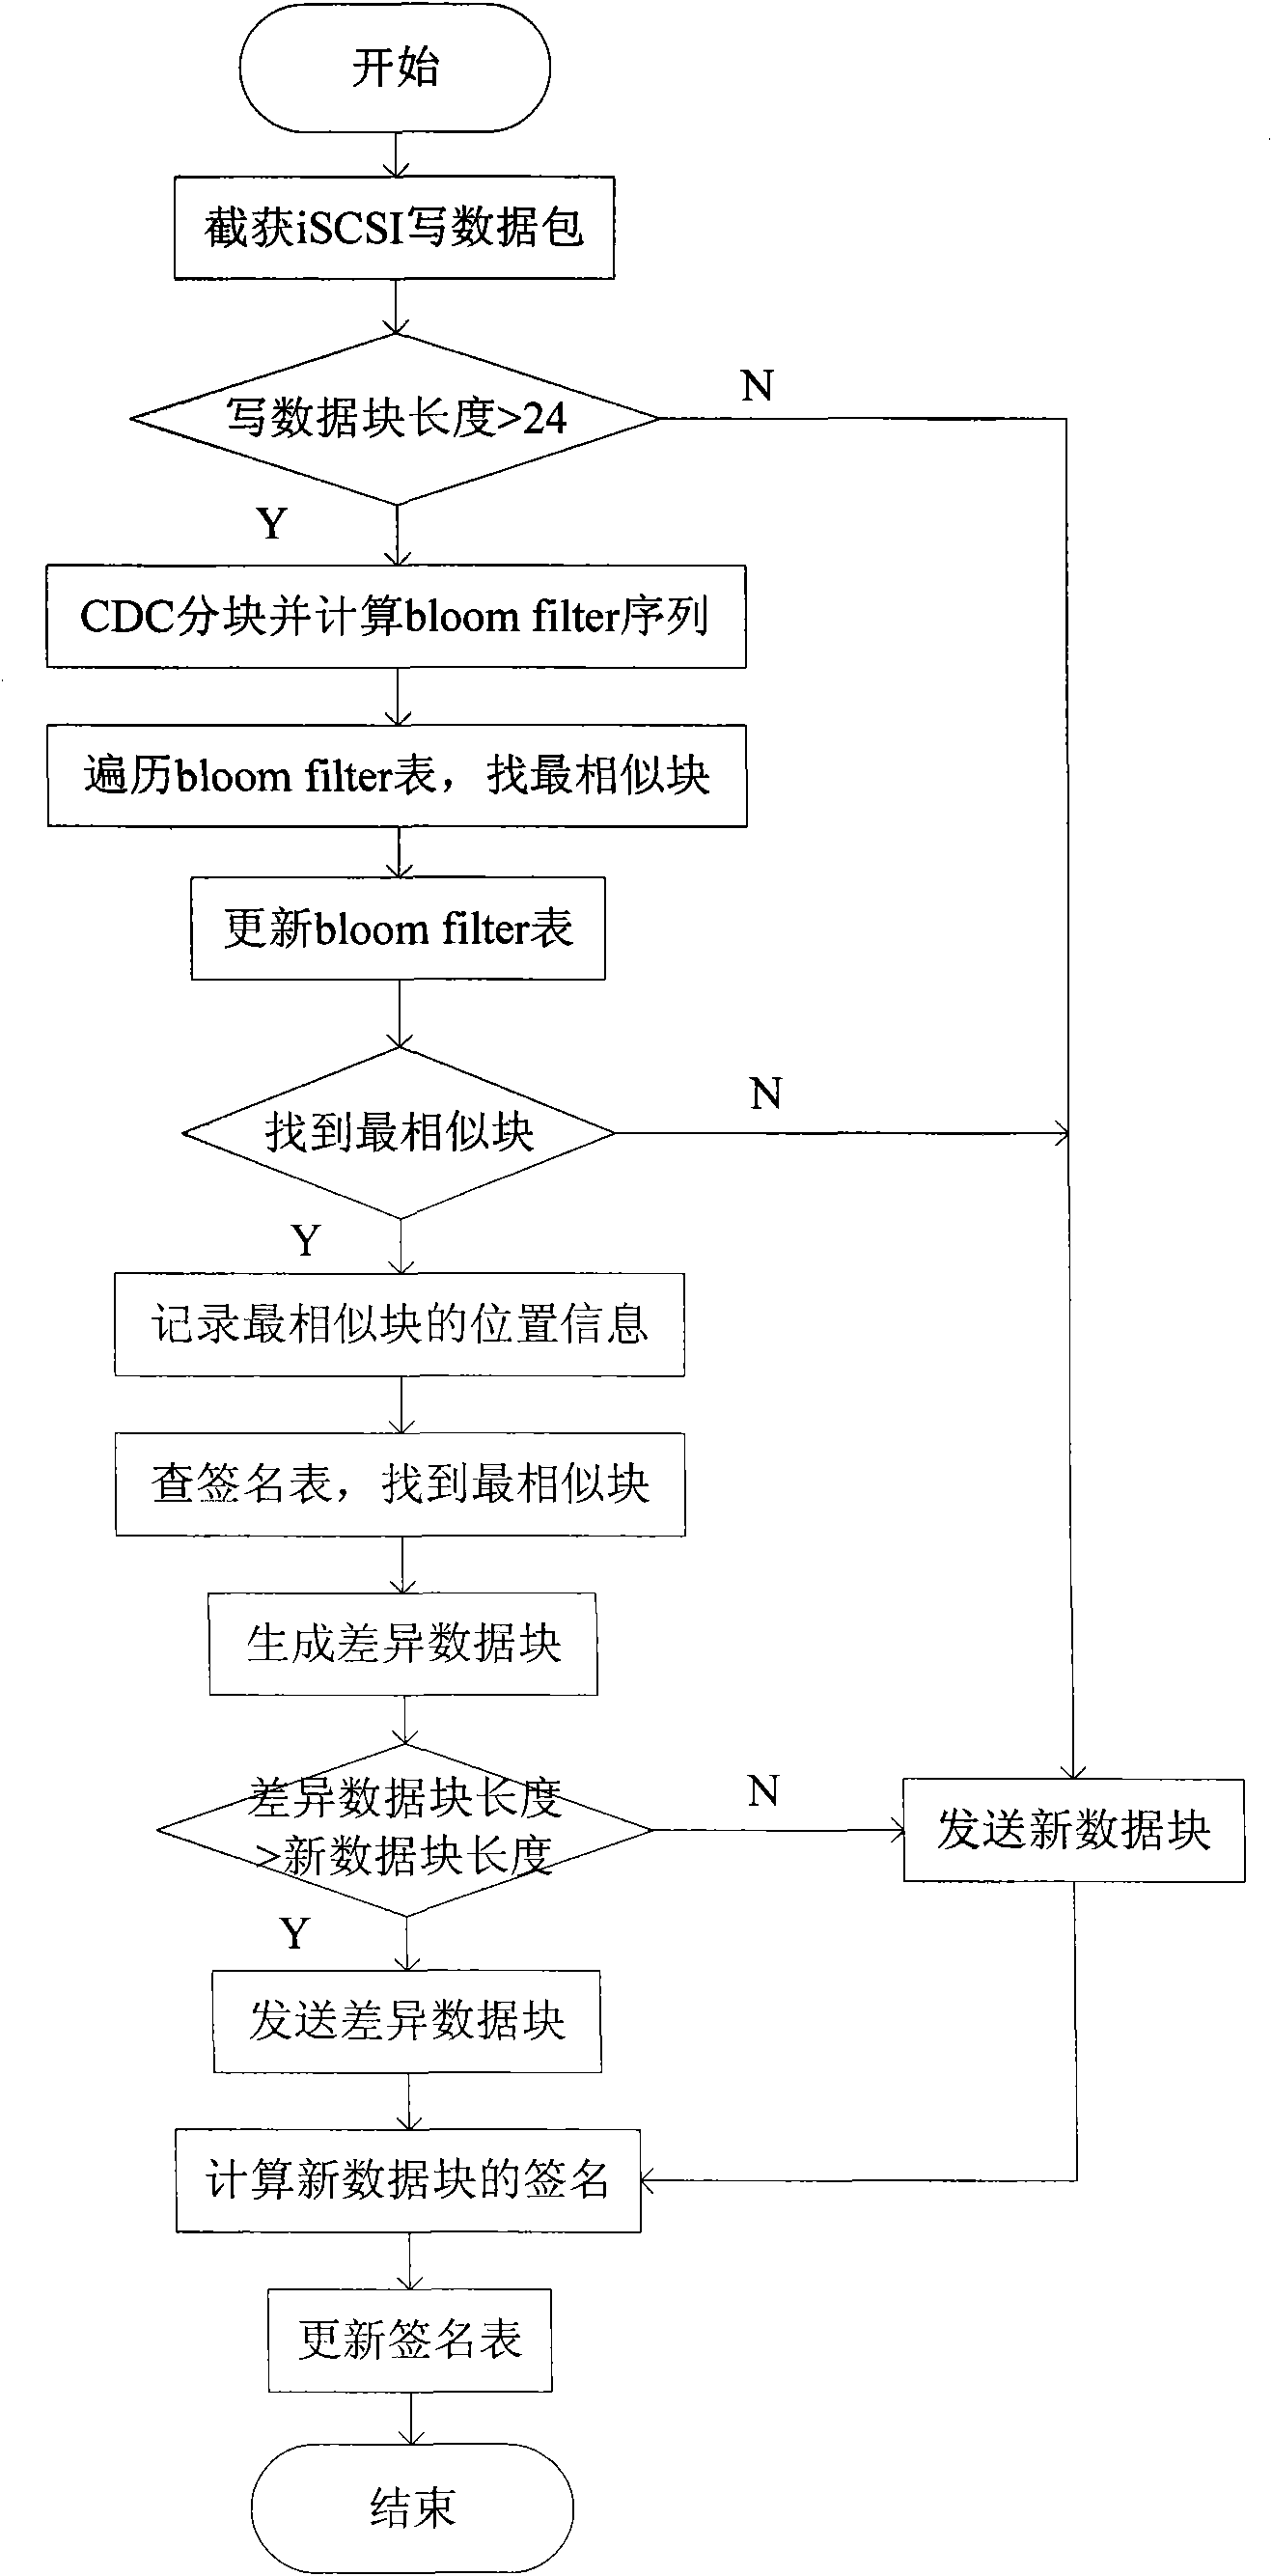 Data deduplication method based on internet small computer system interface (iSCSI)